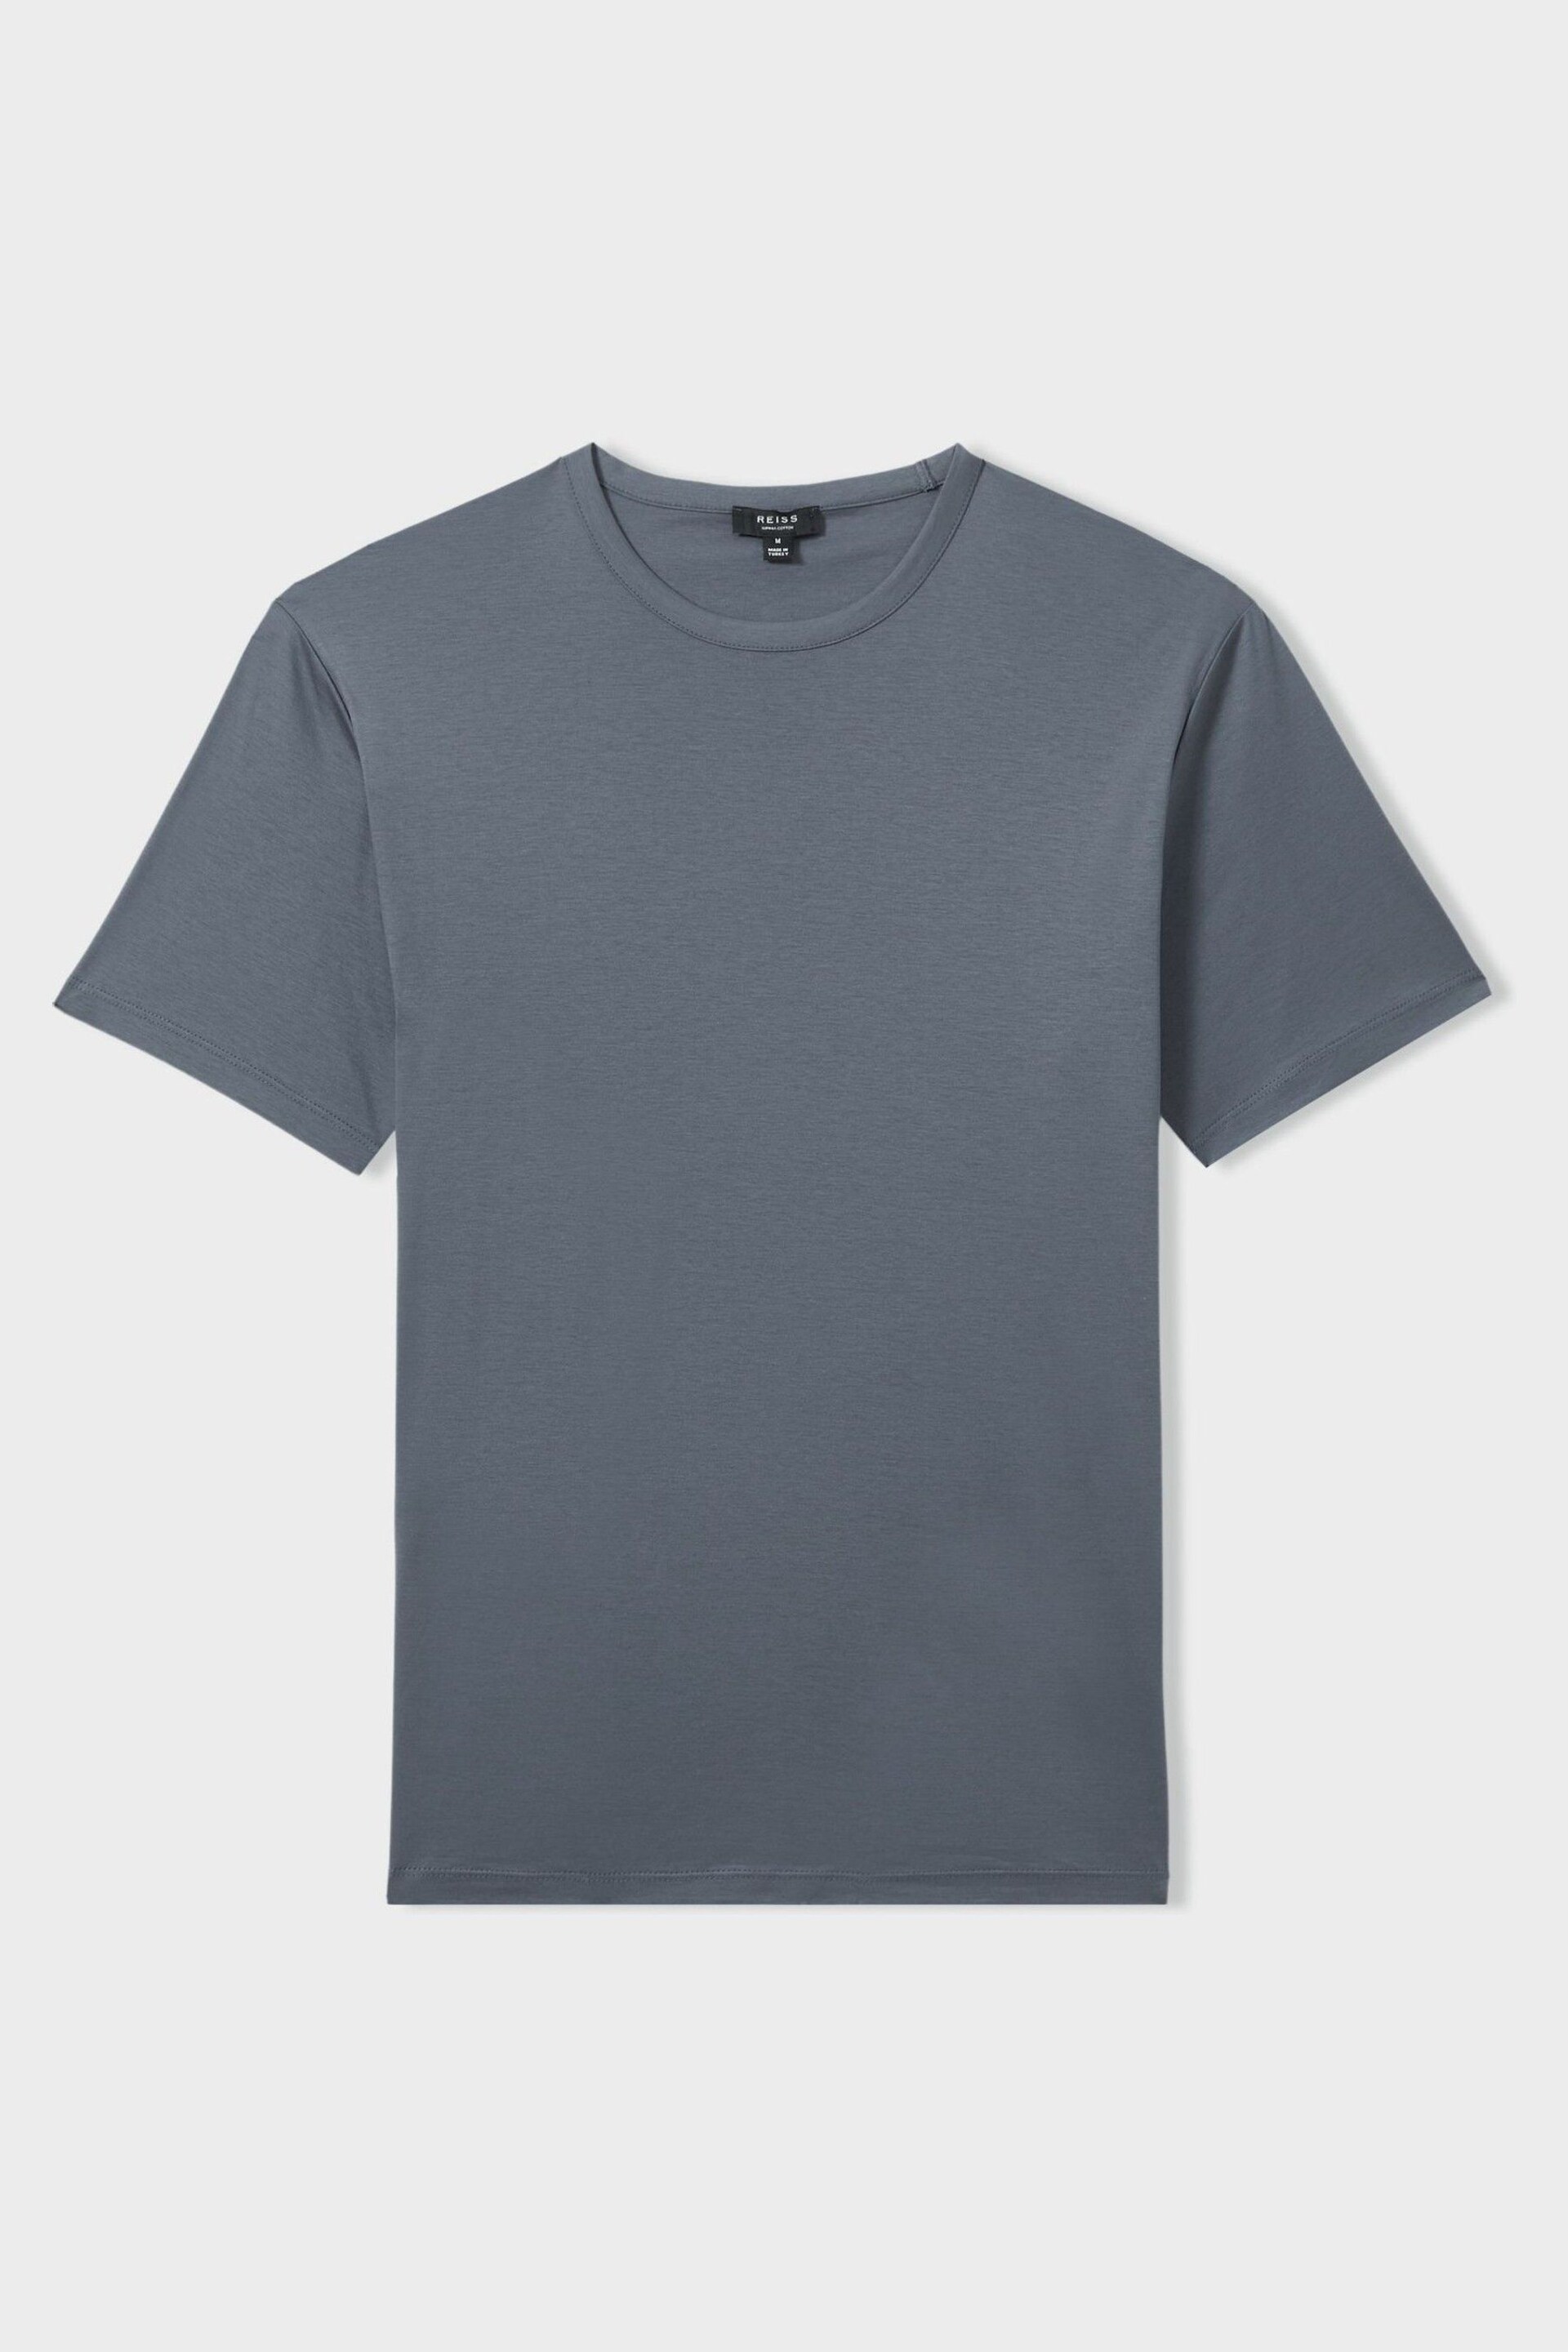 Reiss Airforce Blue Capri Cotton Crew Neck T-Shirt - Image 2 of 5